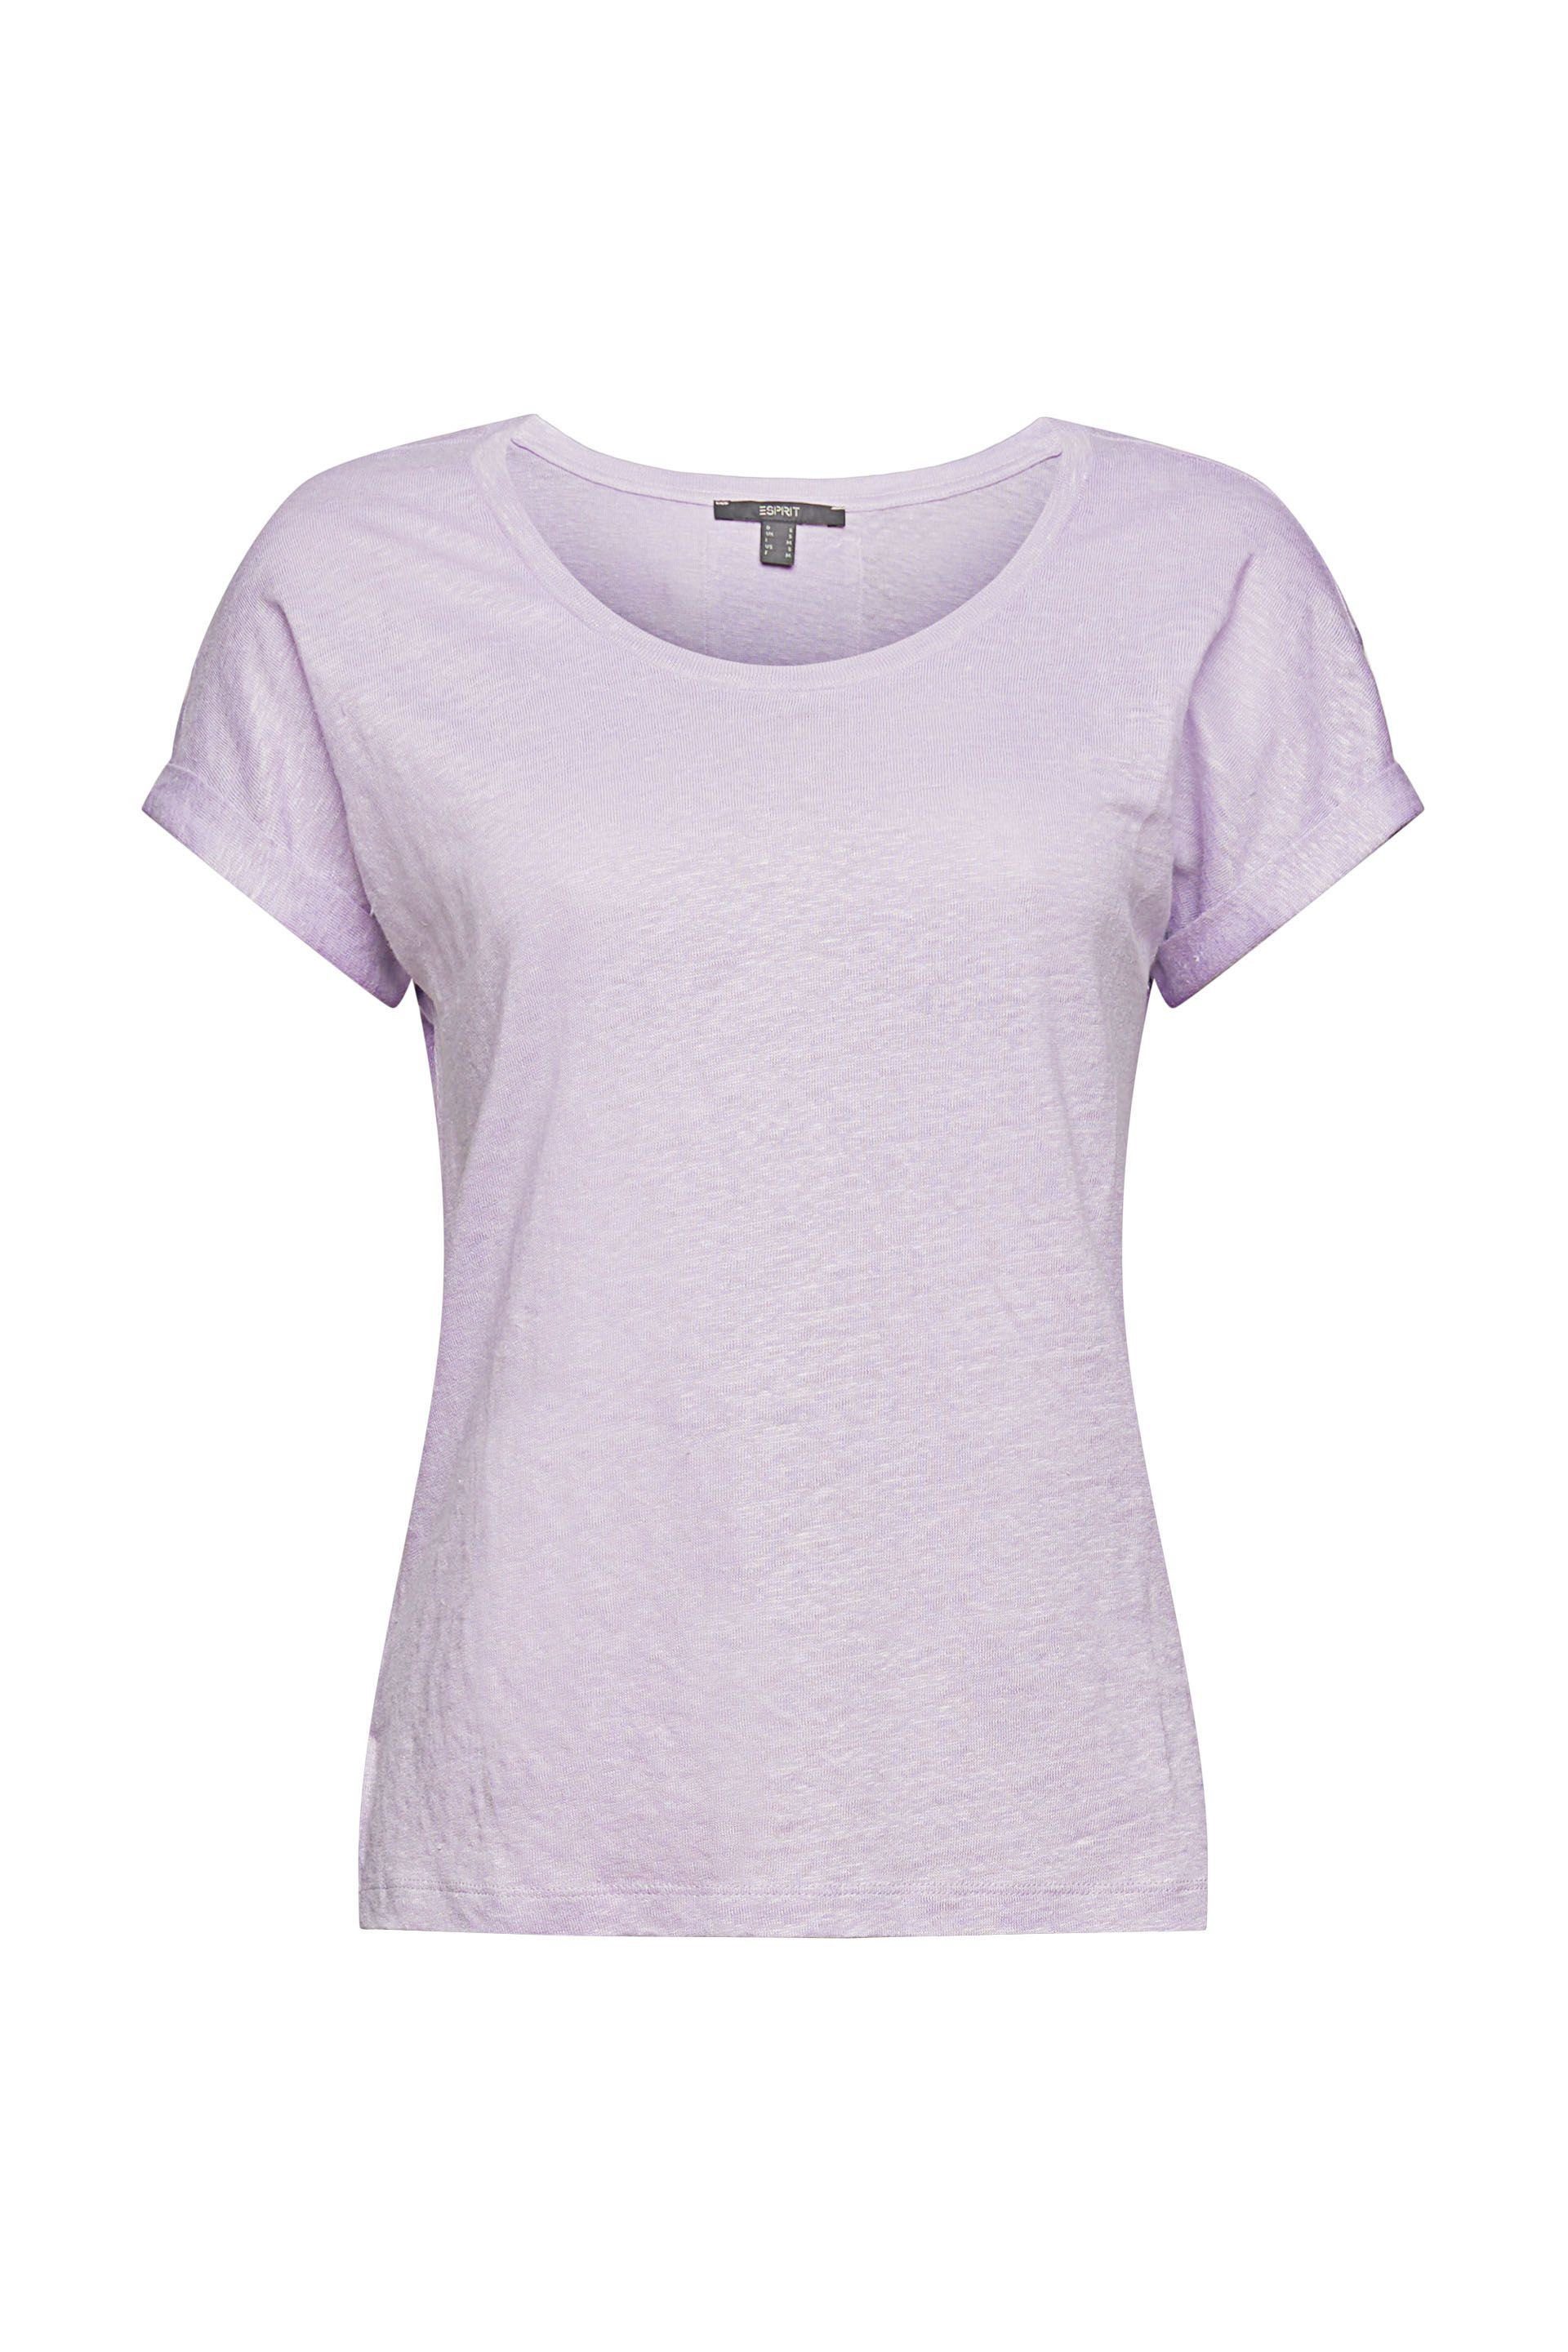 Esprit aus T-Shirt Leinen T-Shirt lavender 100%